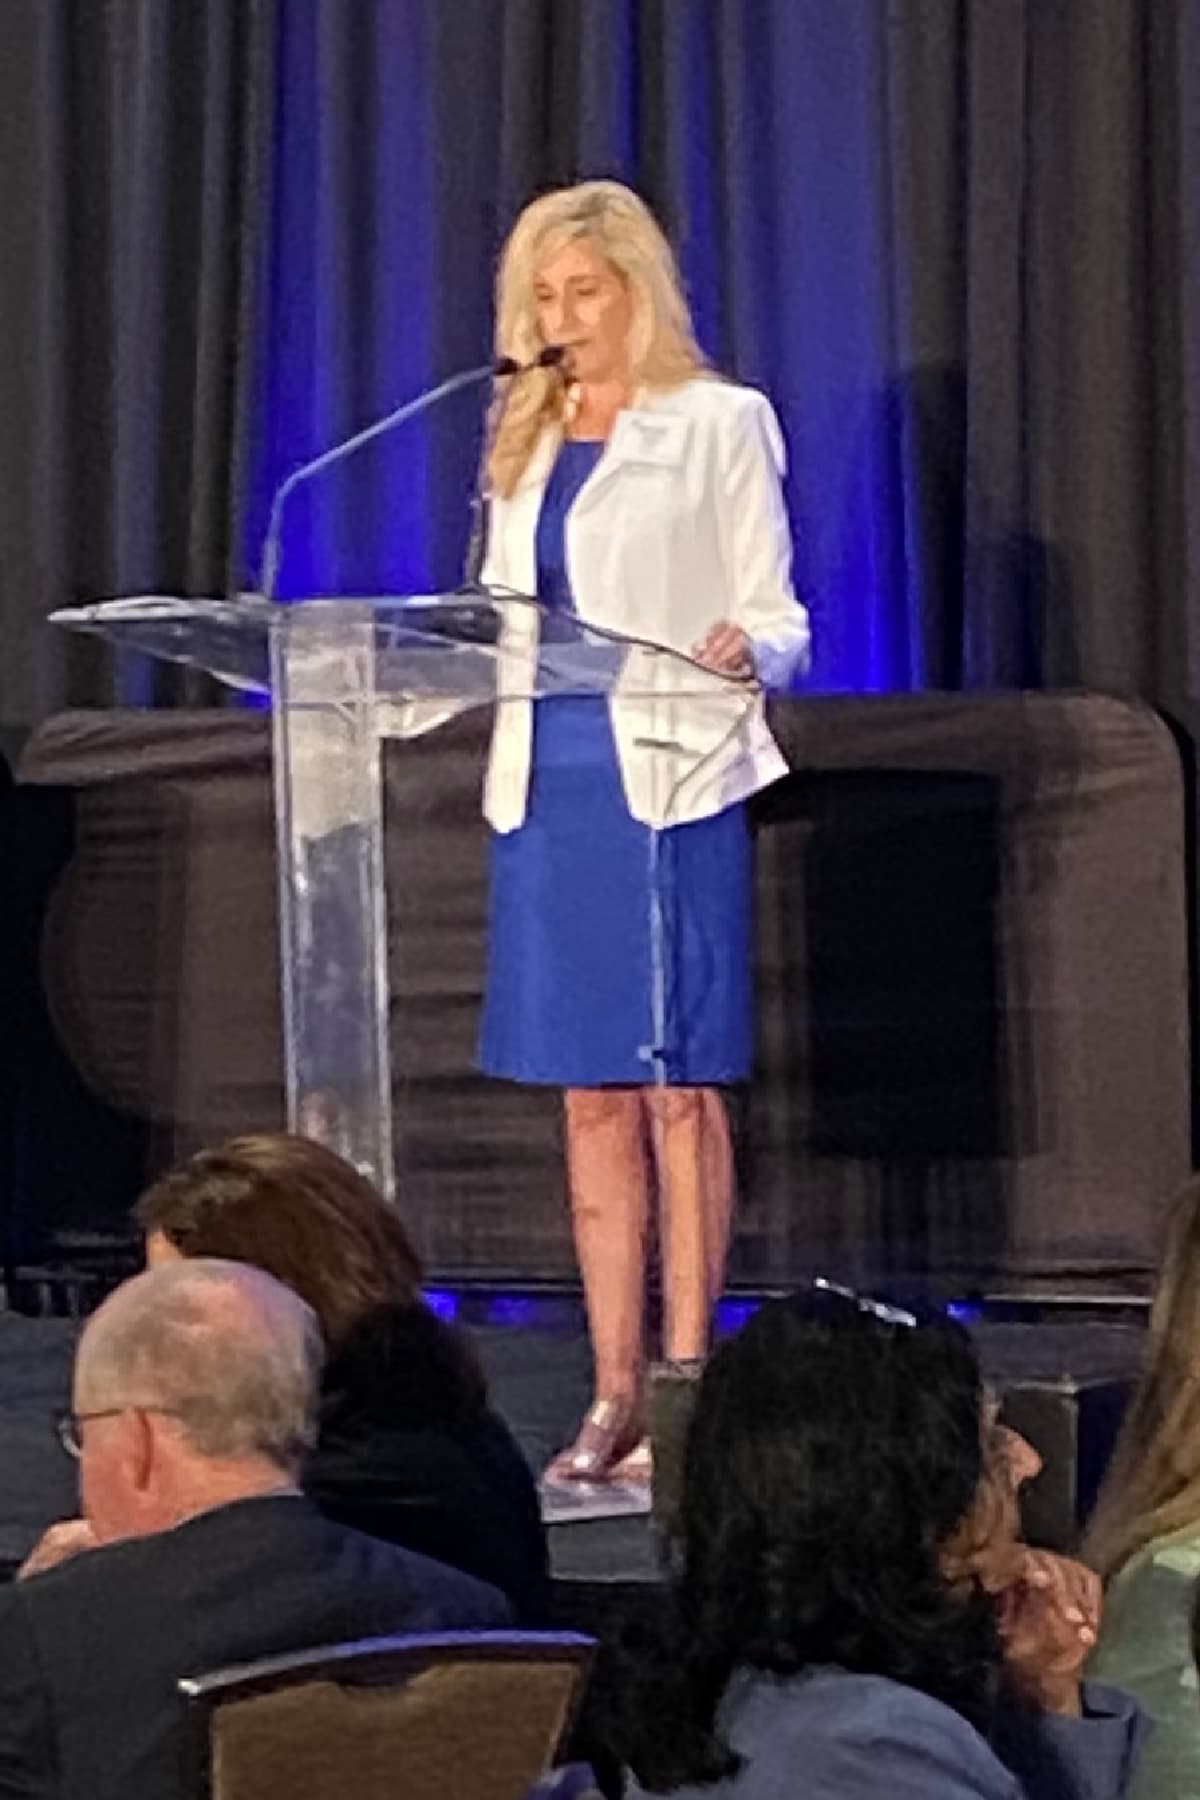 Tina giving a speech at a podium